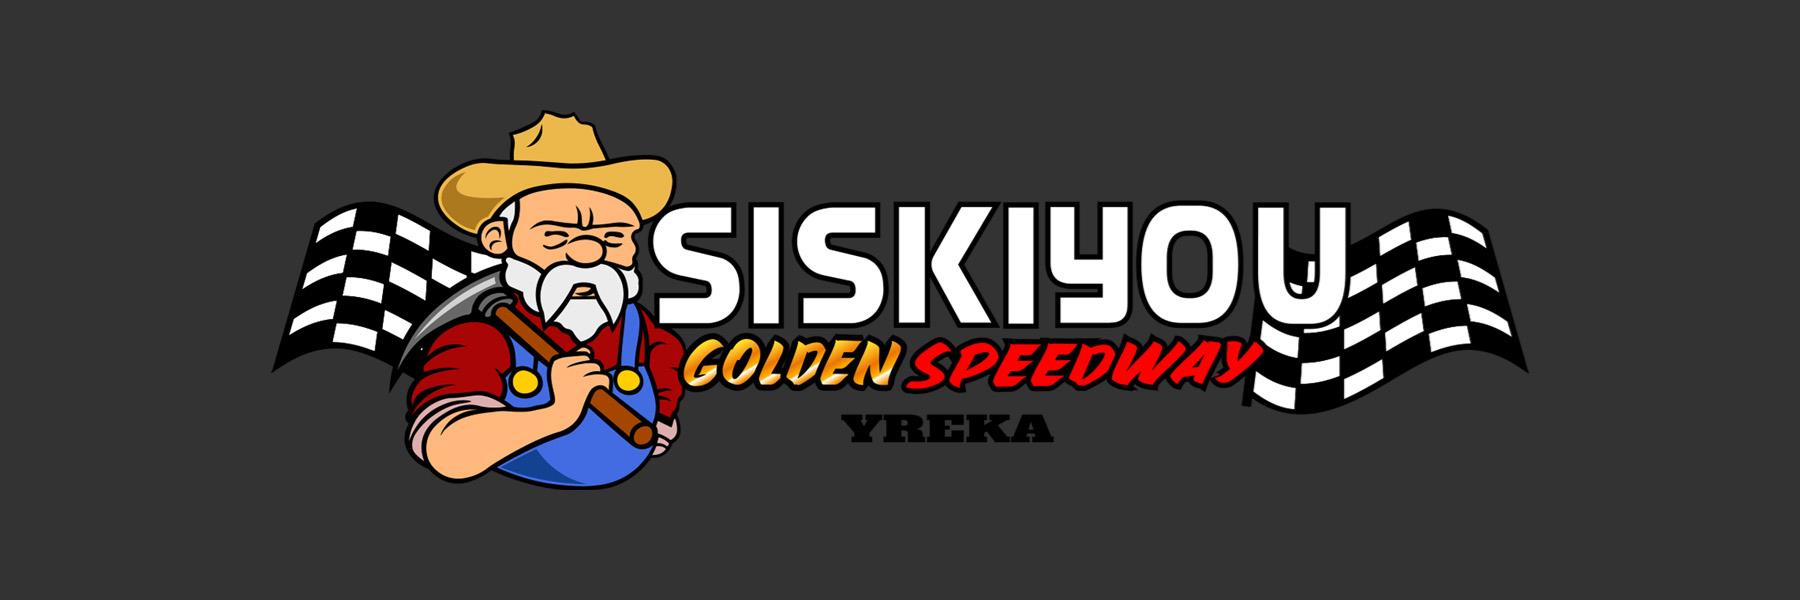 7/1/2022 - Siskiyou Golden Speedway